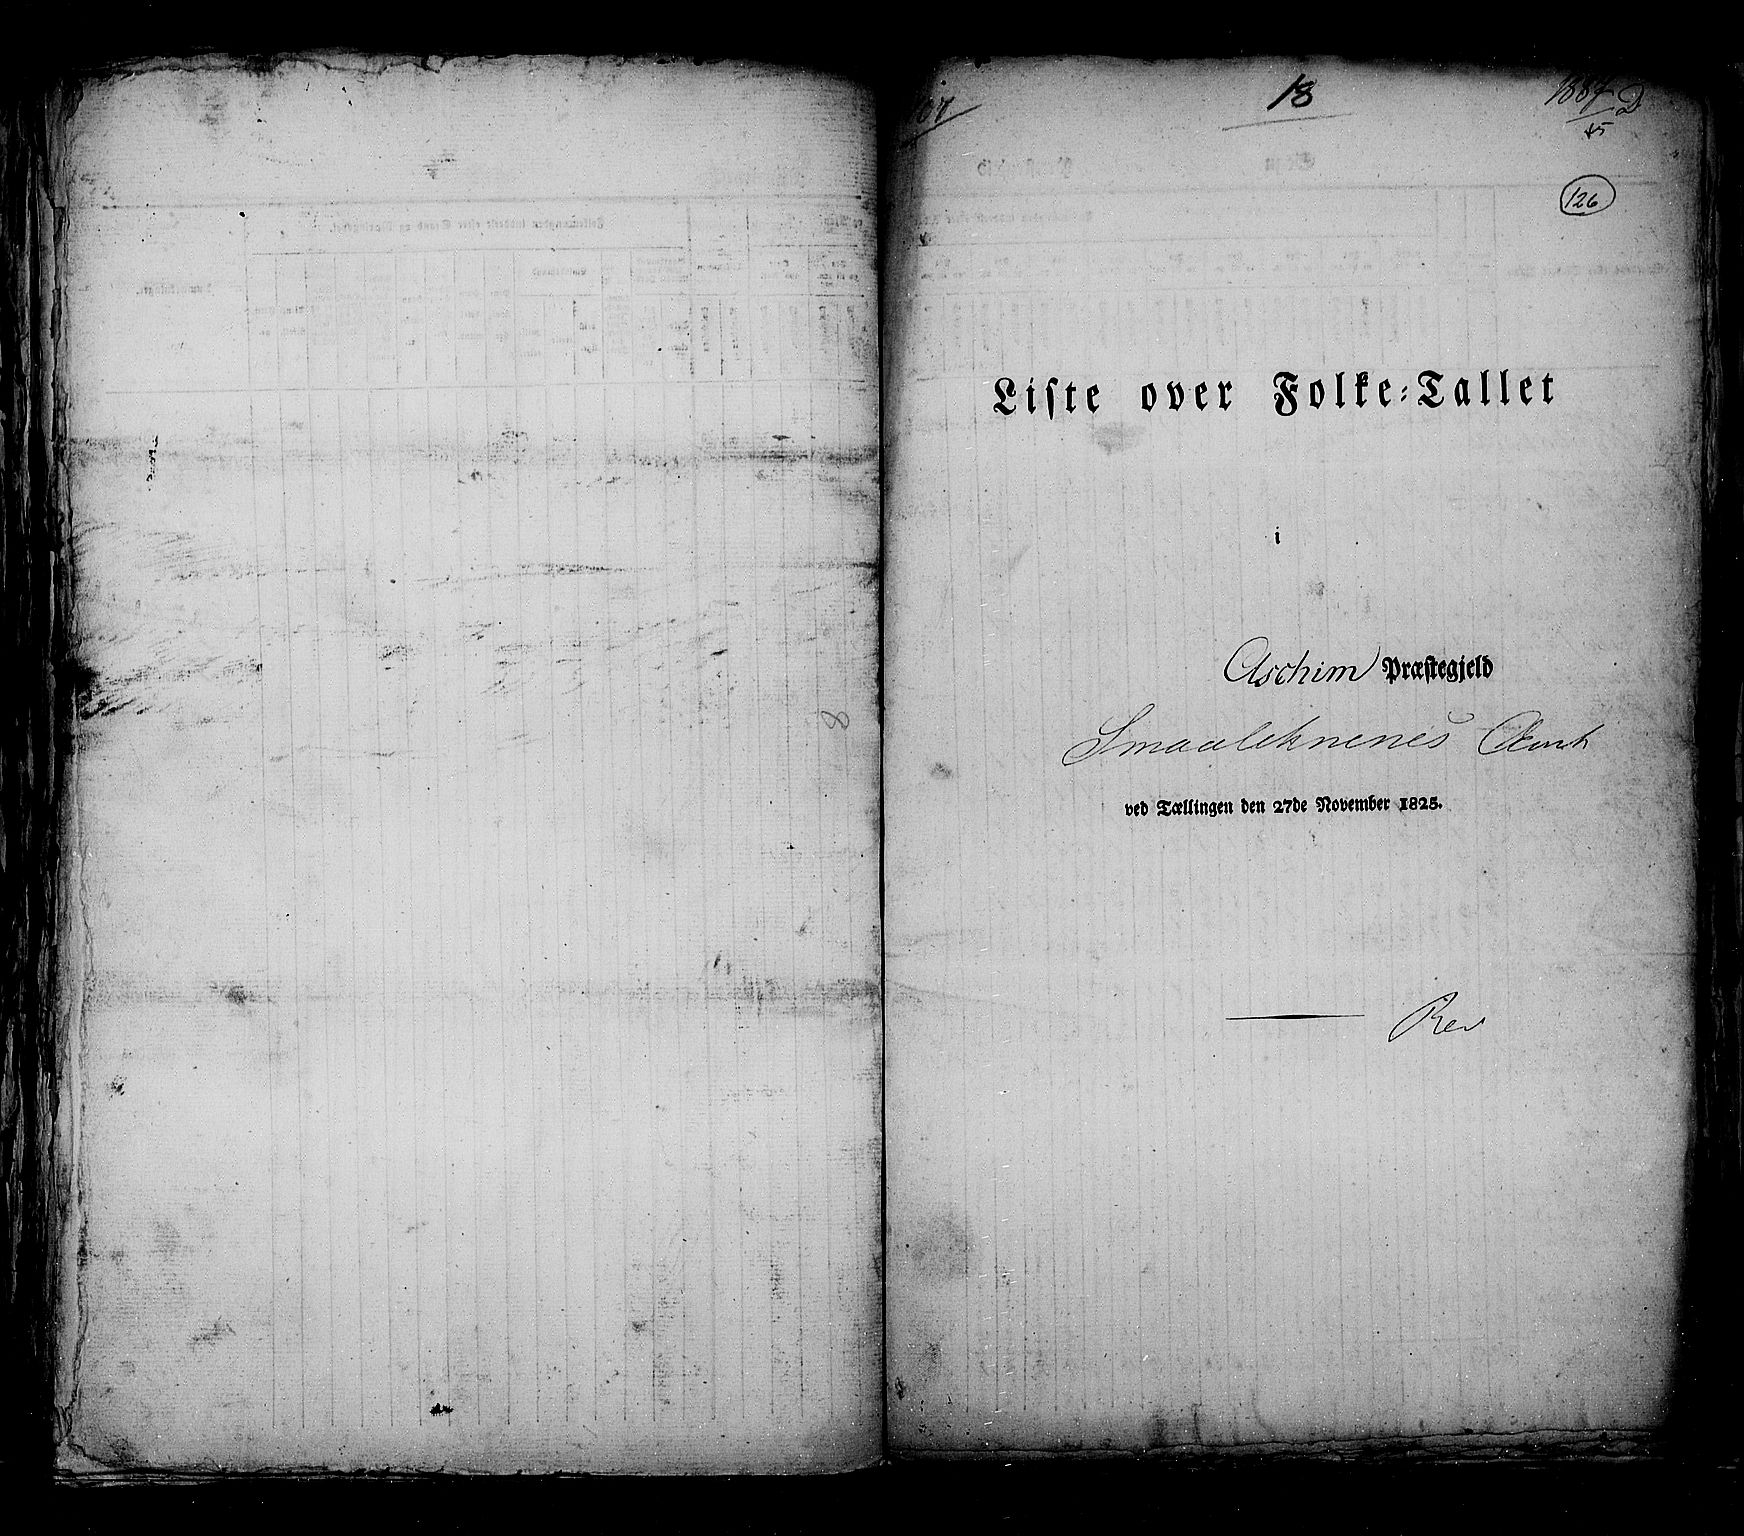 RA, Folketellingen 1825, bind 3: Smålenenes amt, 1825, s. 126